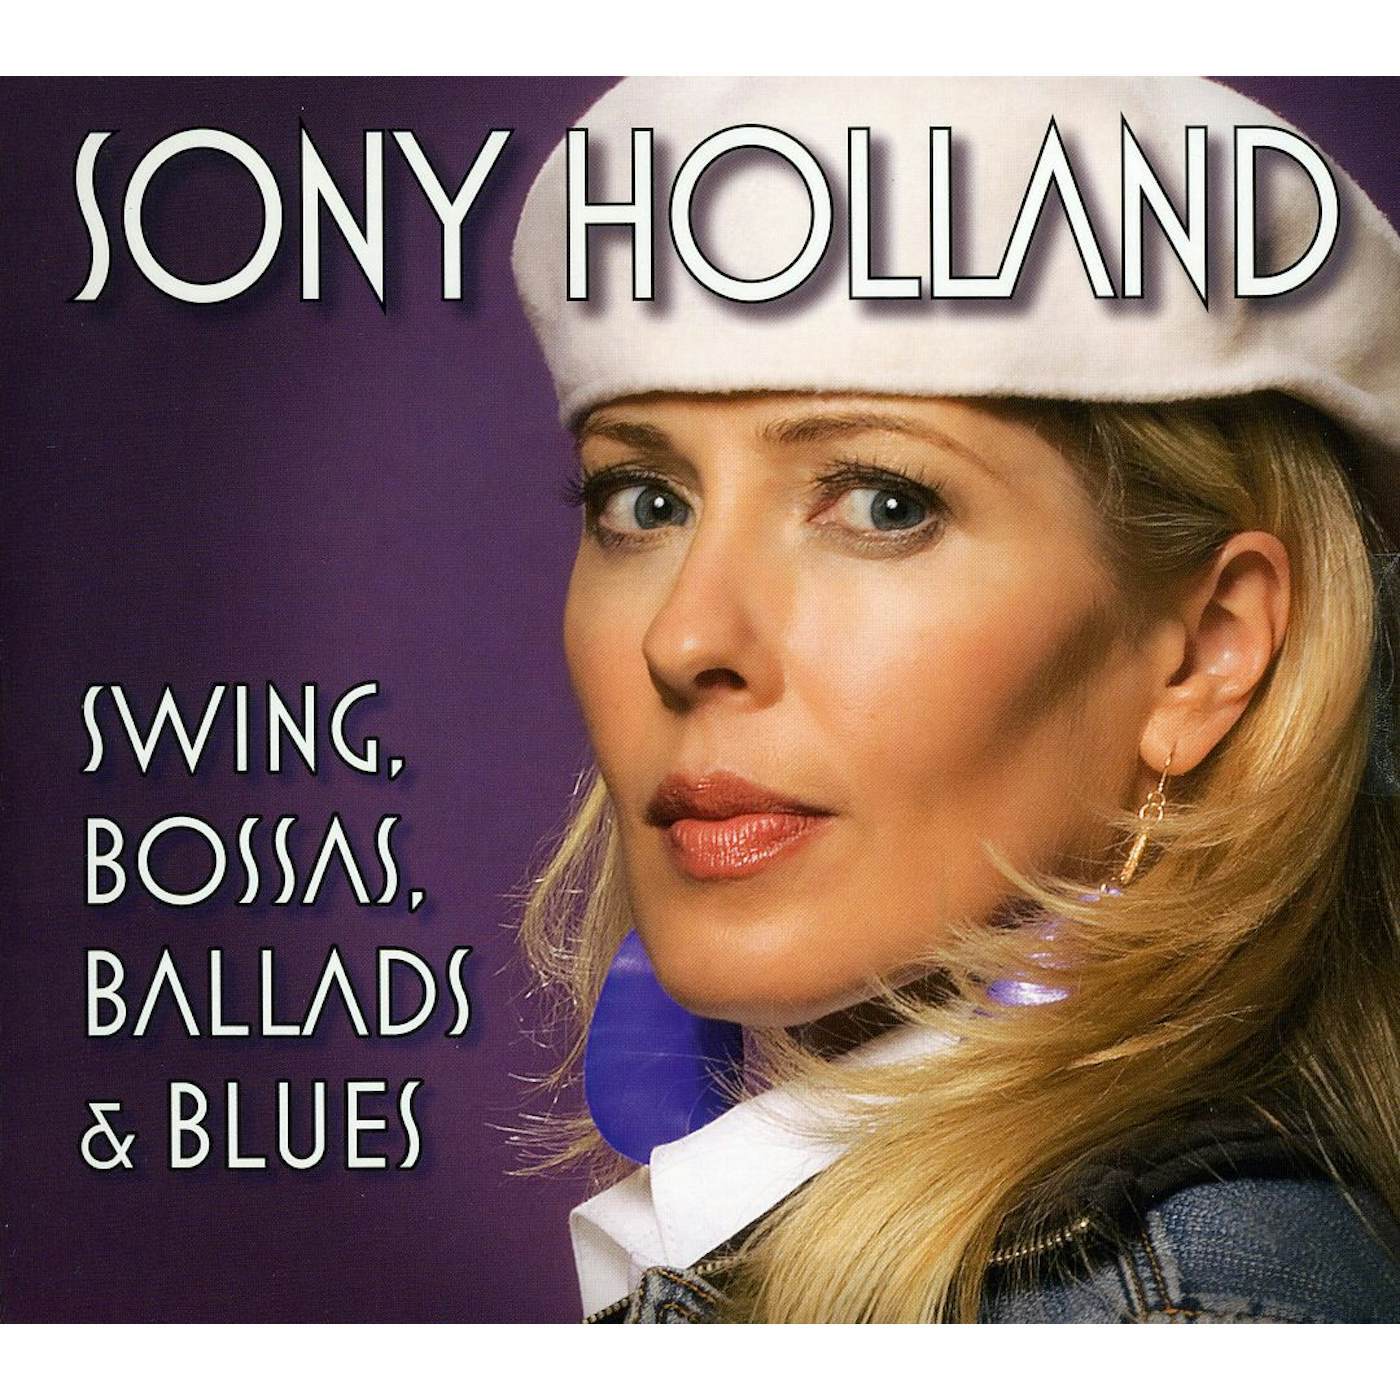 Sony Holland SWING BOSSAS BALLADS & BLUES CD